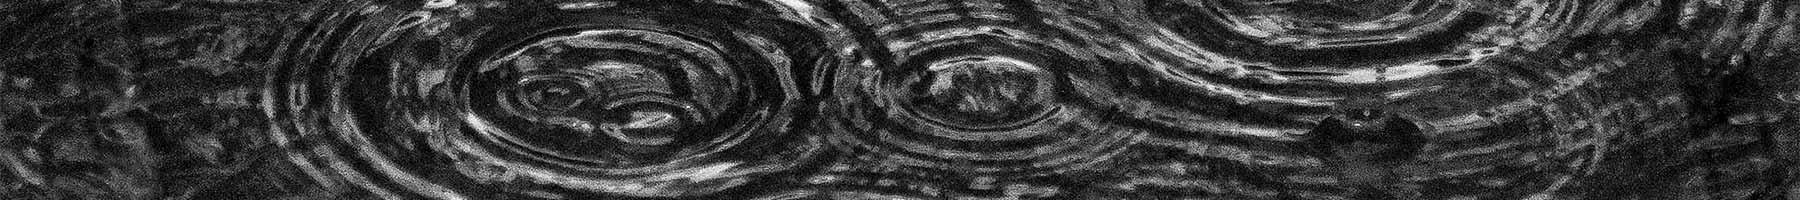 black and white photo of rain ripples on pavement